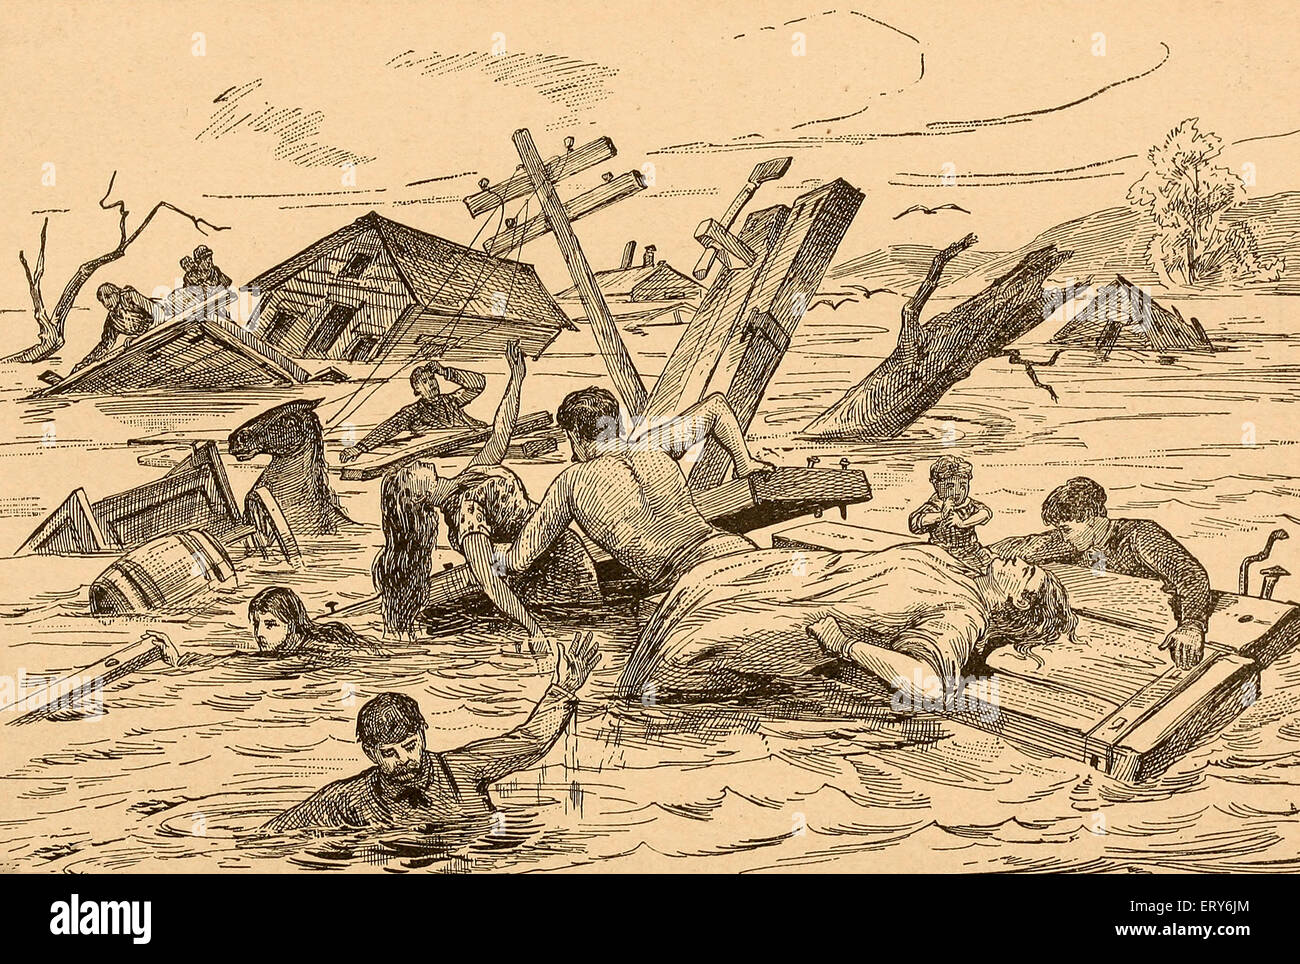 Desperate struggle for Life - Johnstown Flood, 1889 Stock Photo